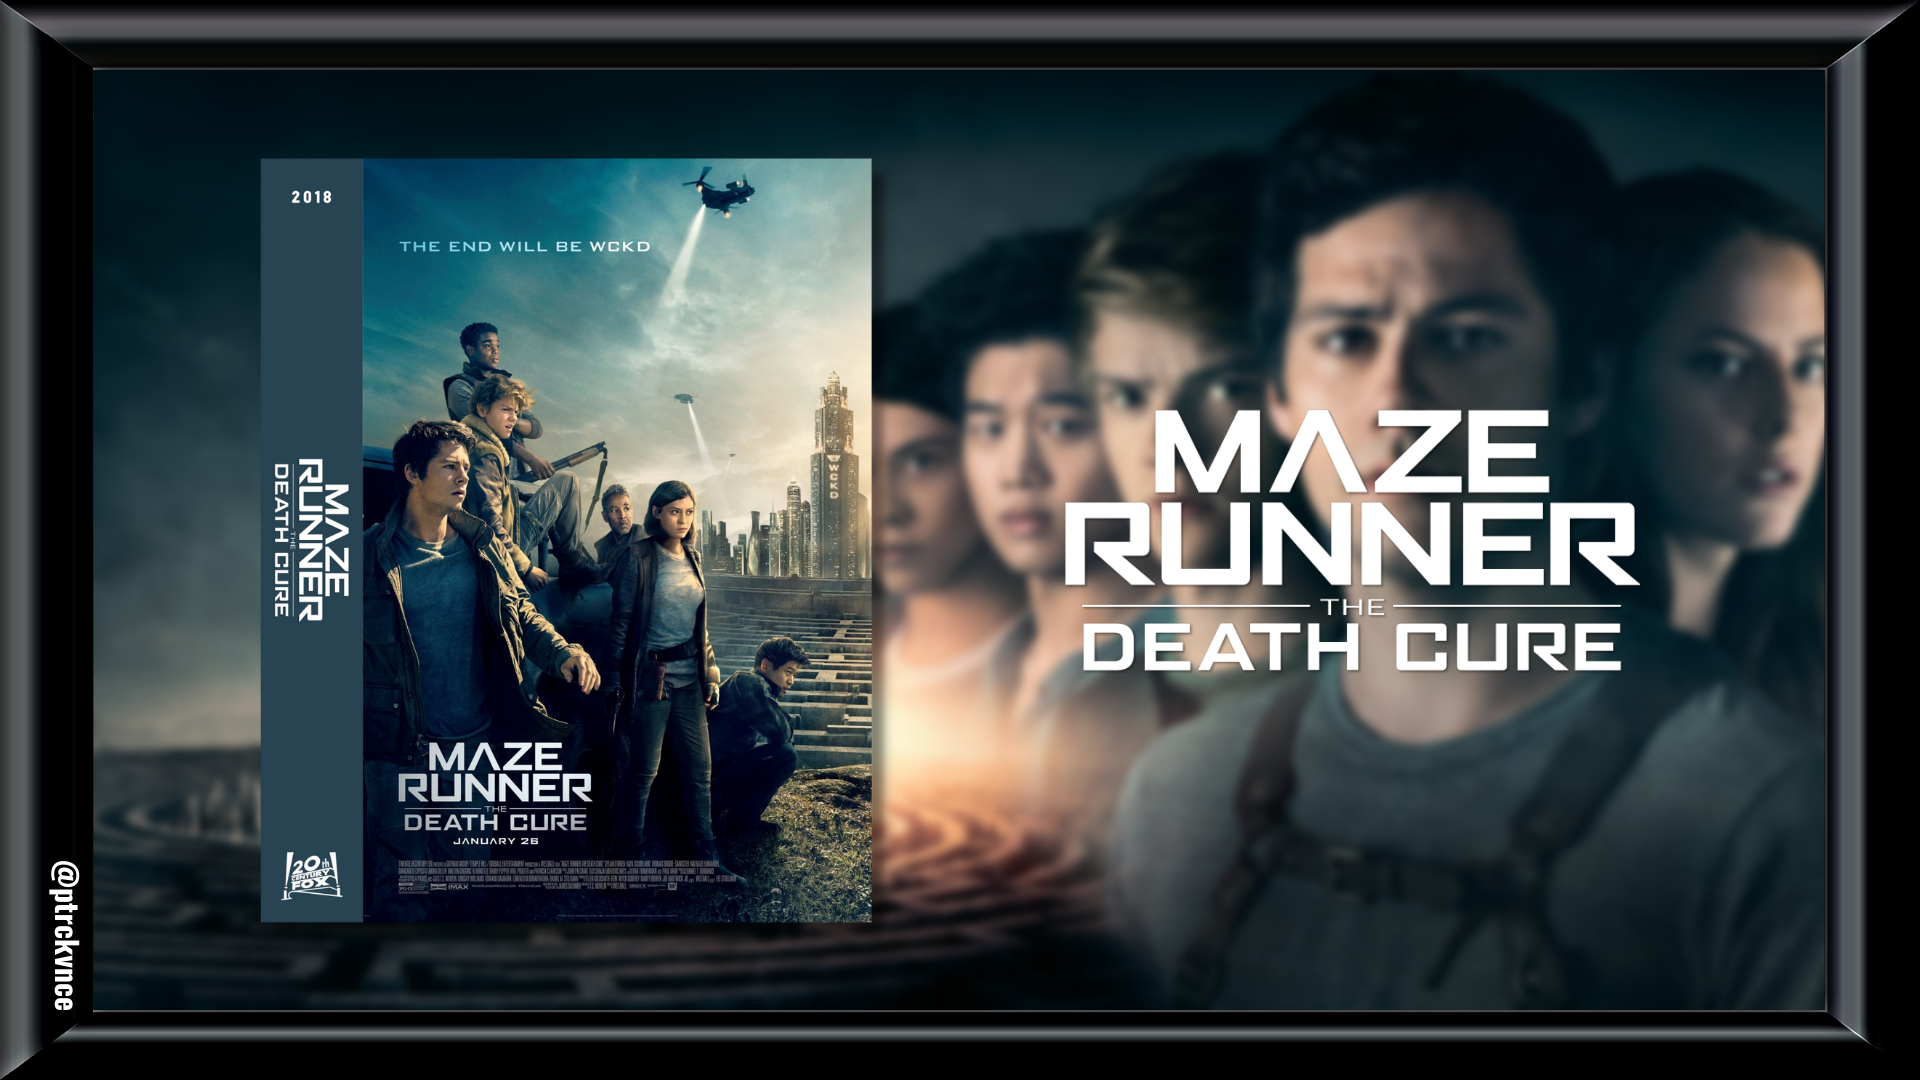 Maze Runner 3(The Death Cure)-2017 folder icon 03 by HeshanMadhusanka3 on  DeviantArt